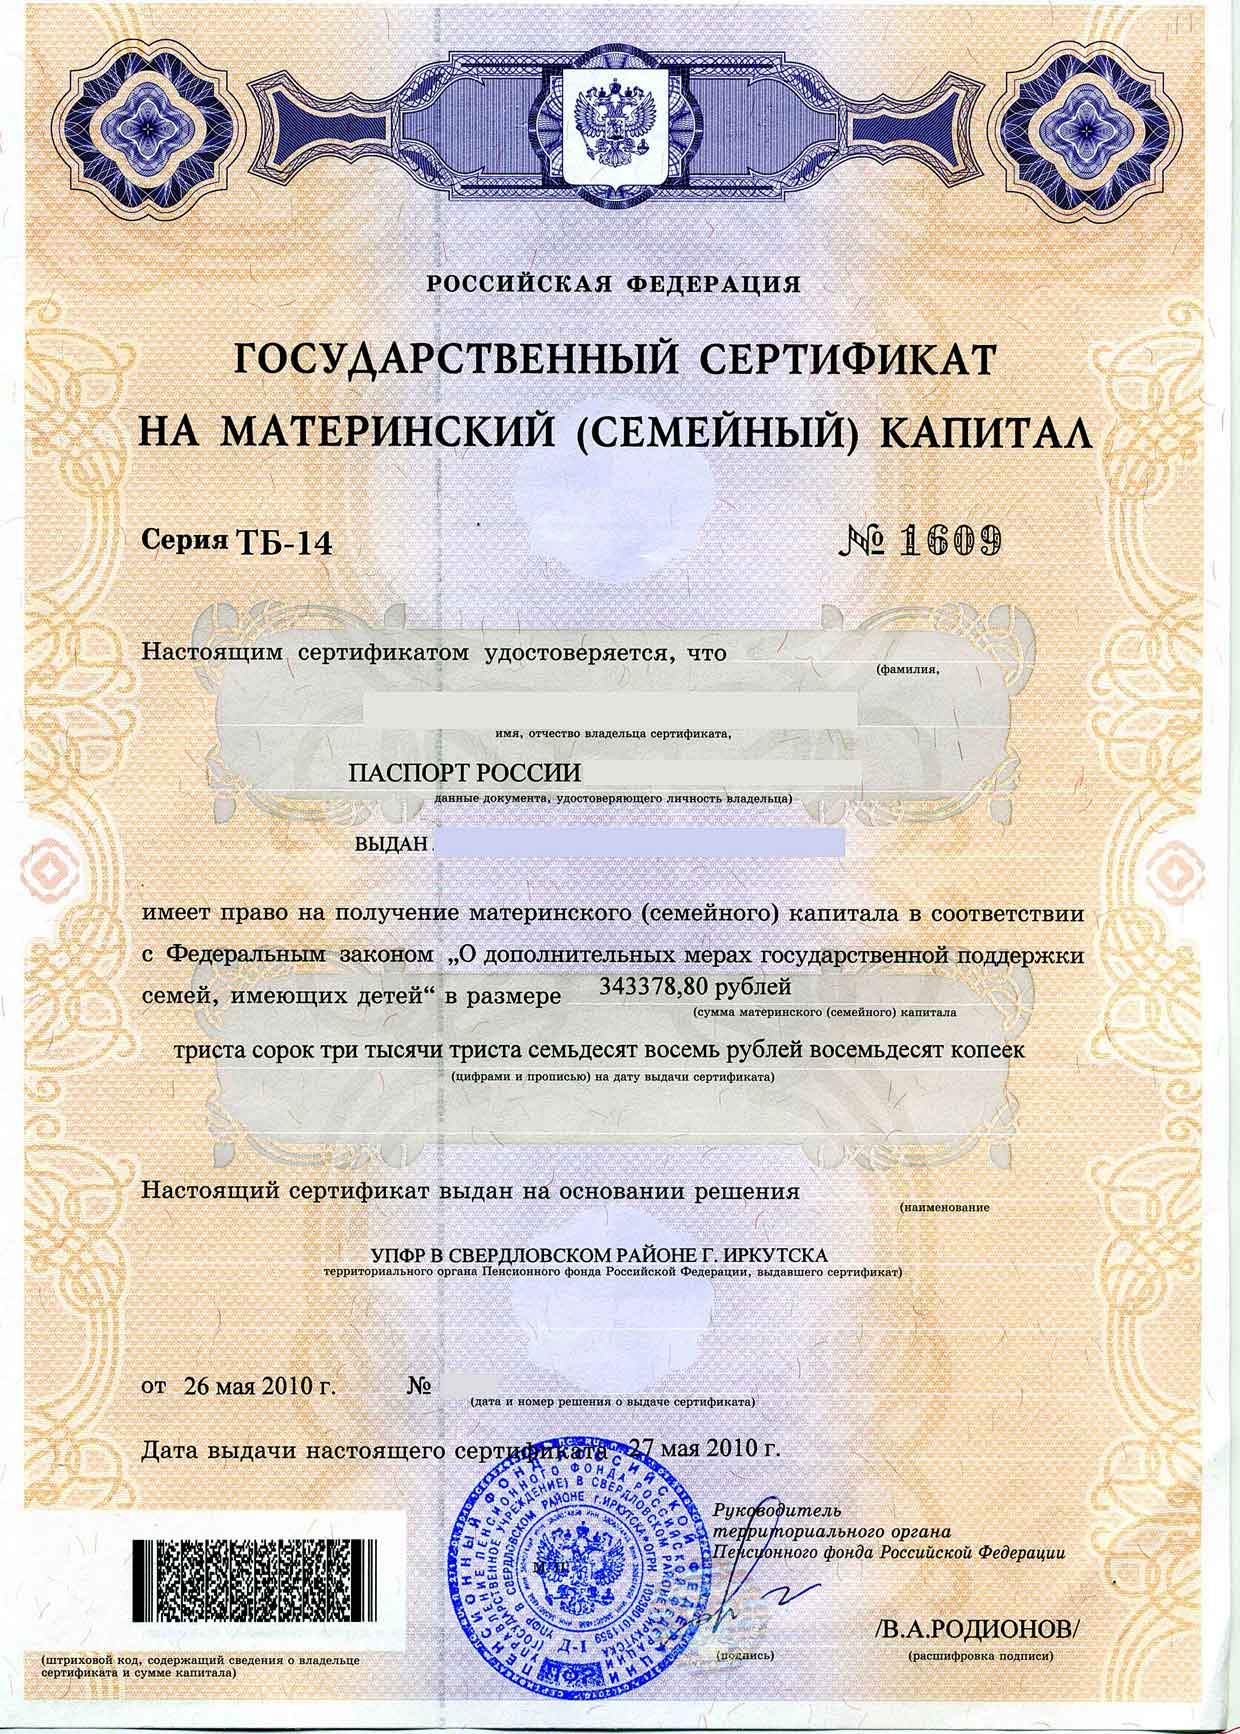 сертификат о материнском капиталу